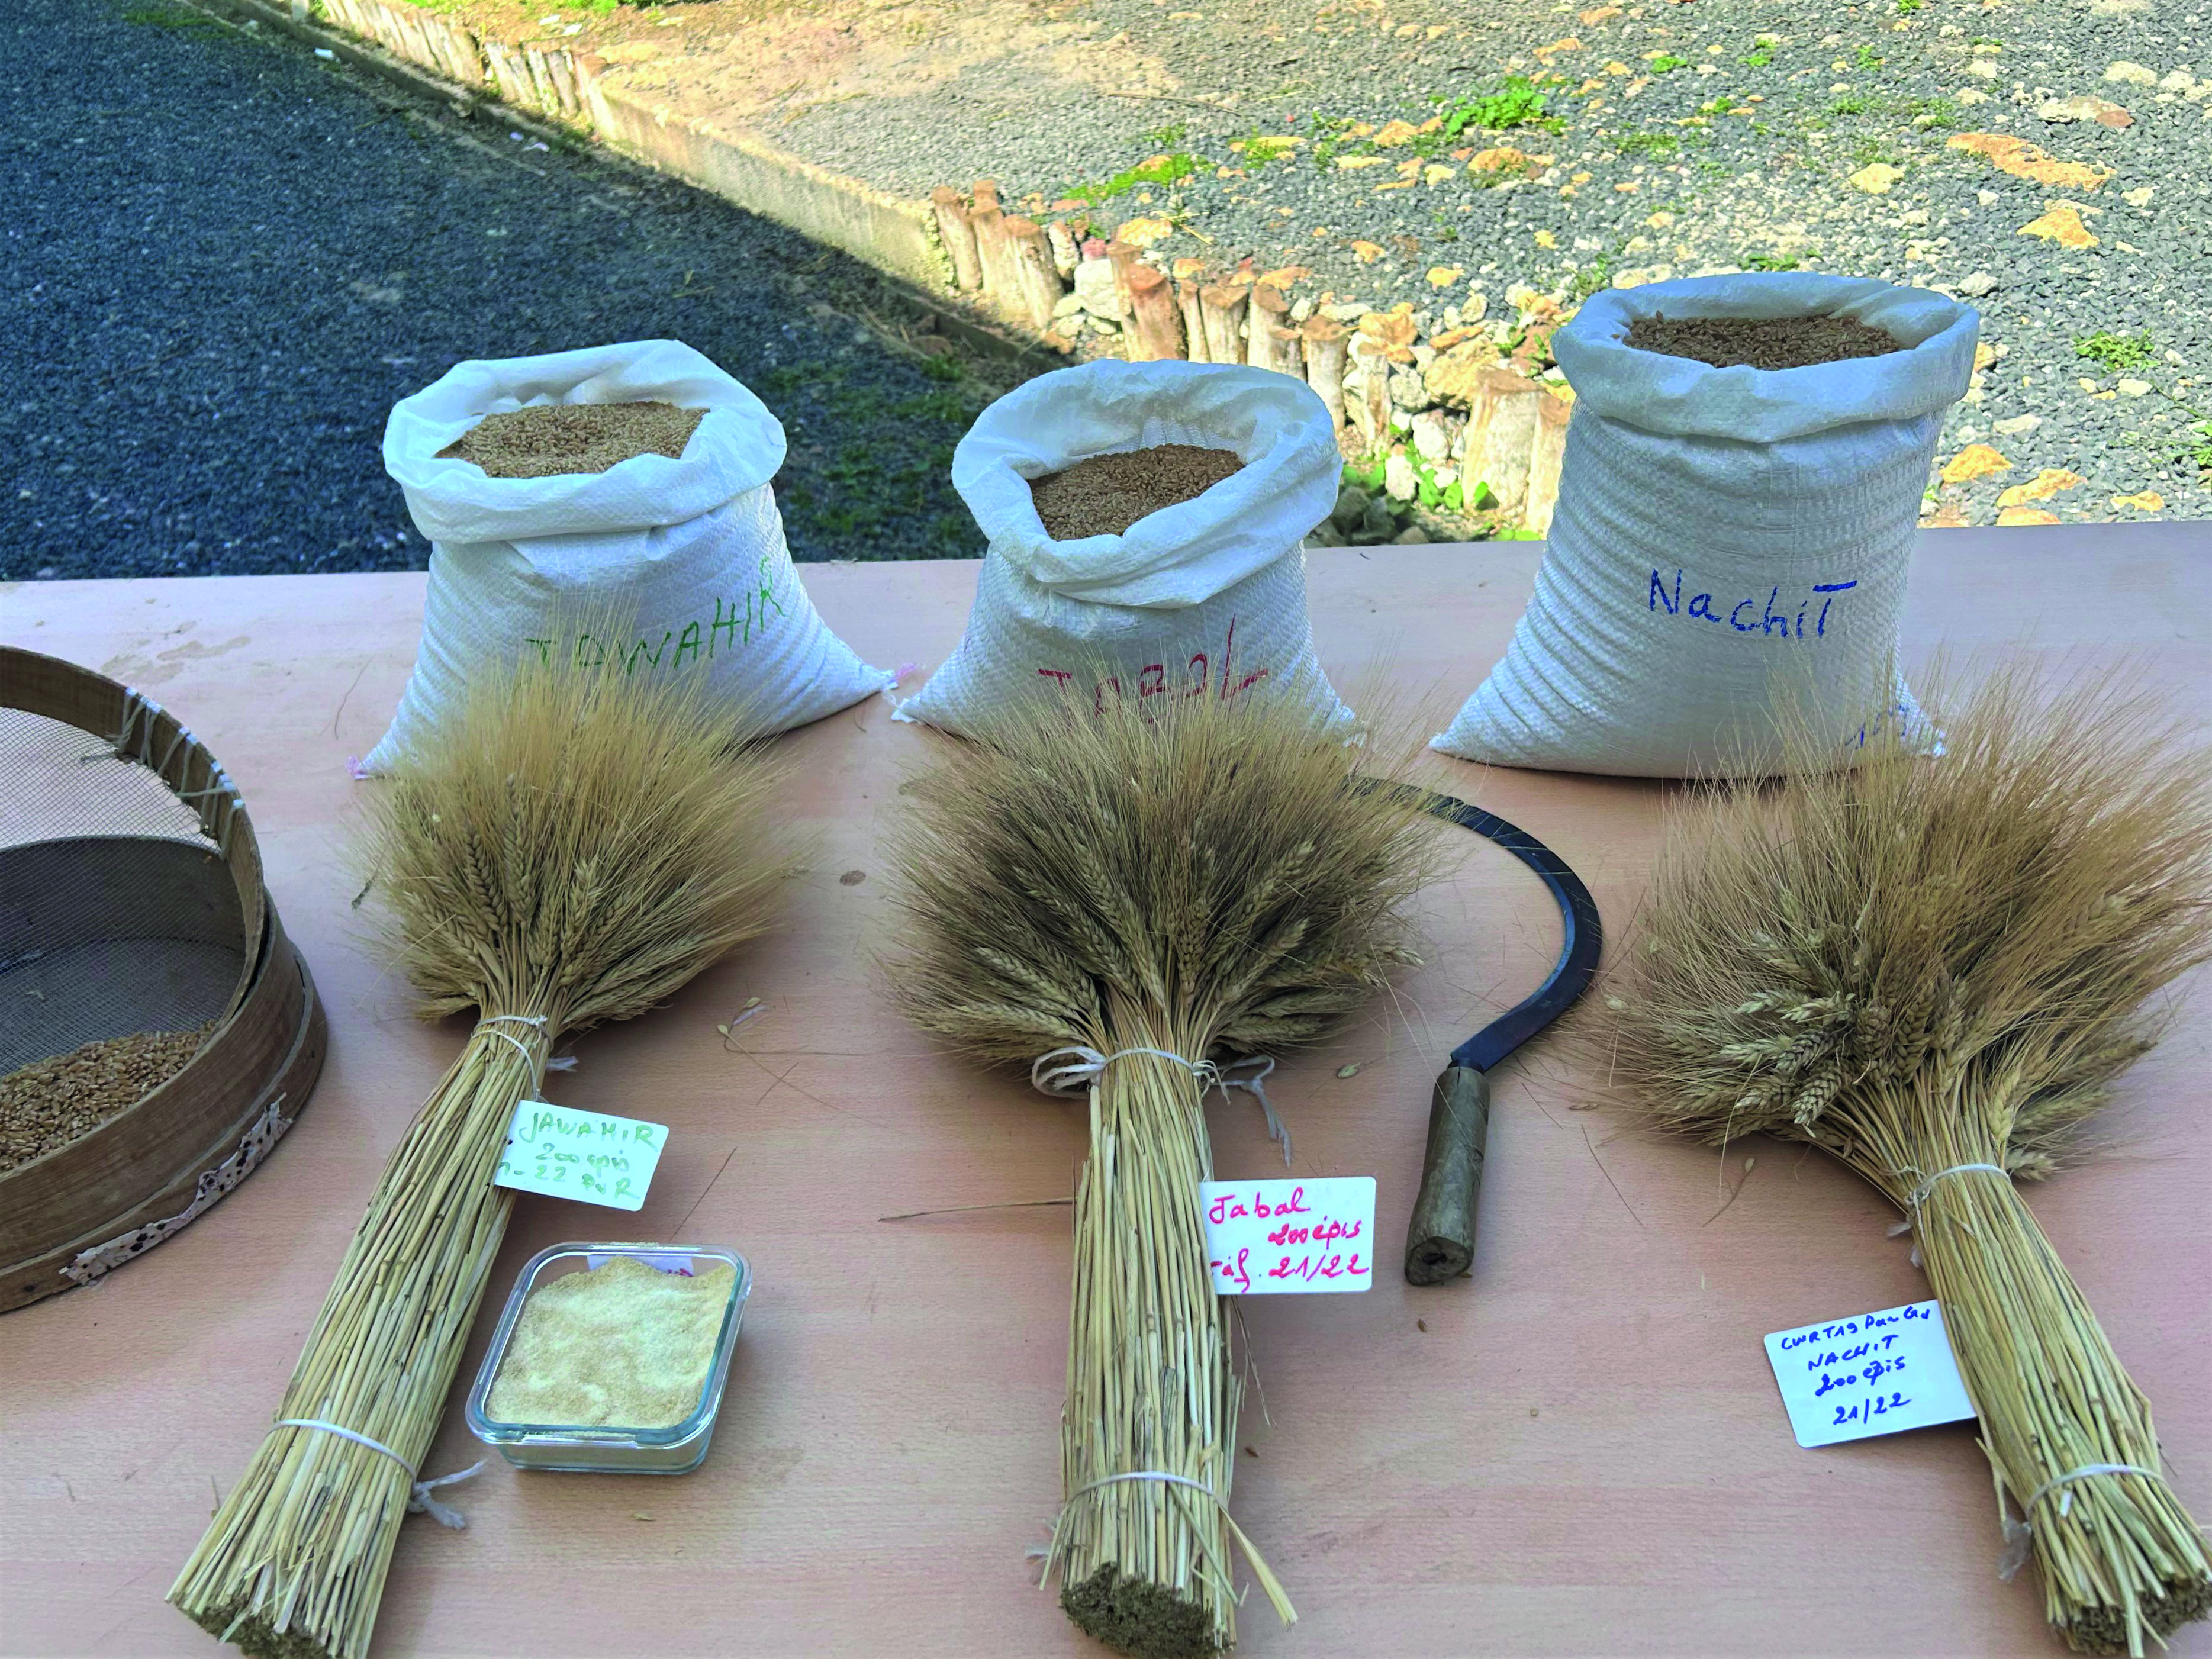 The ICARDA durum wheat program to combat climate change